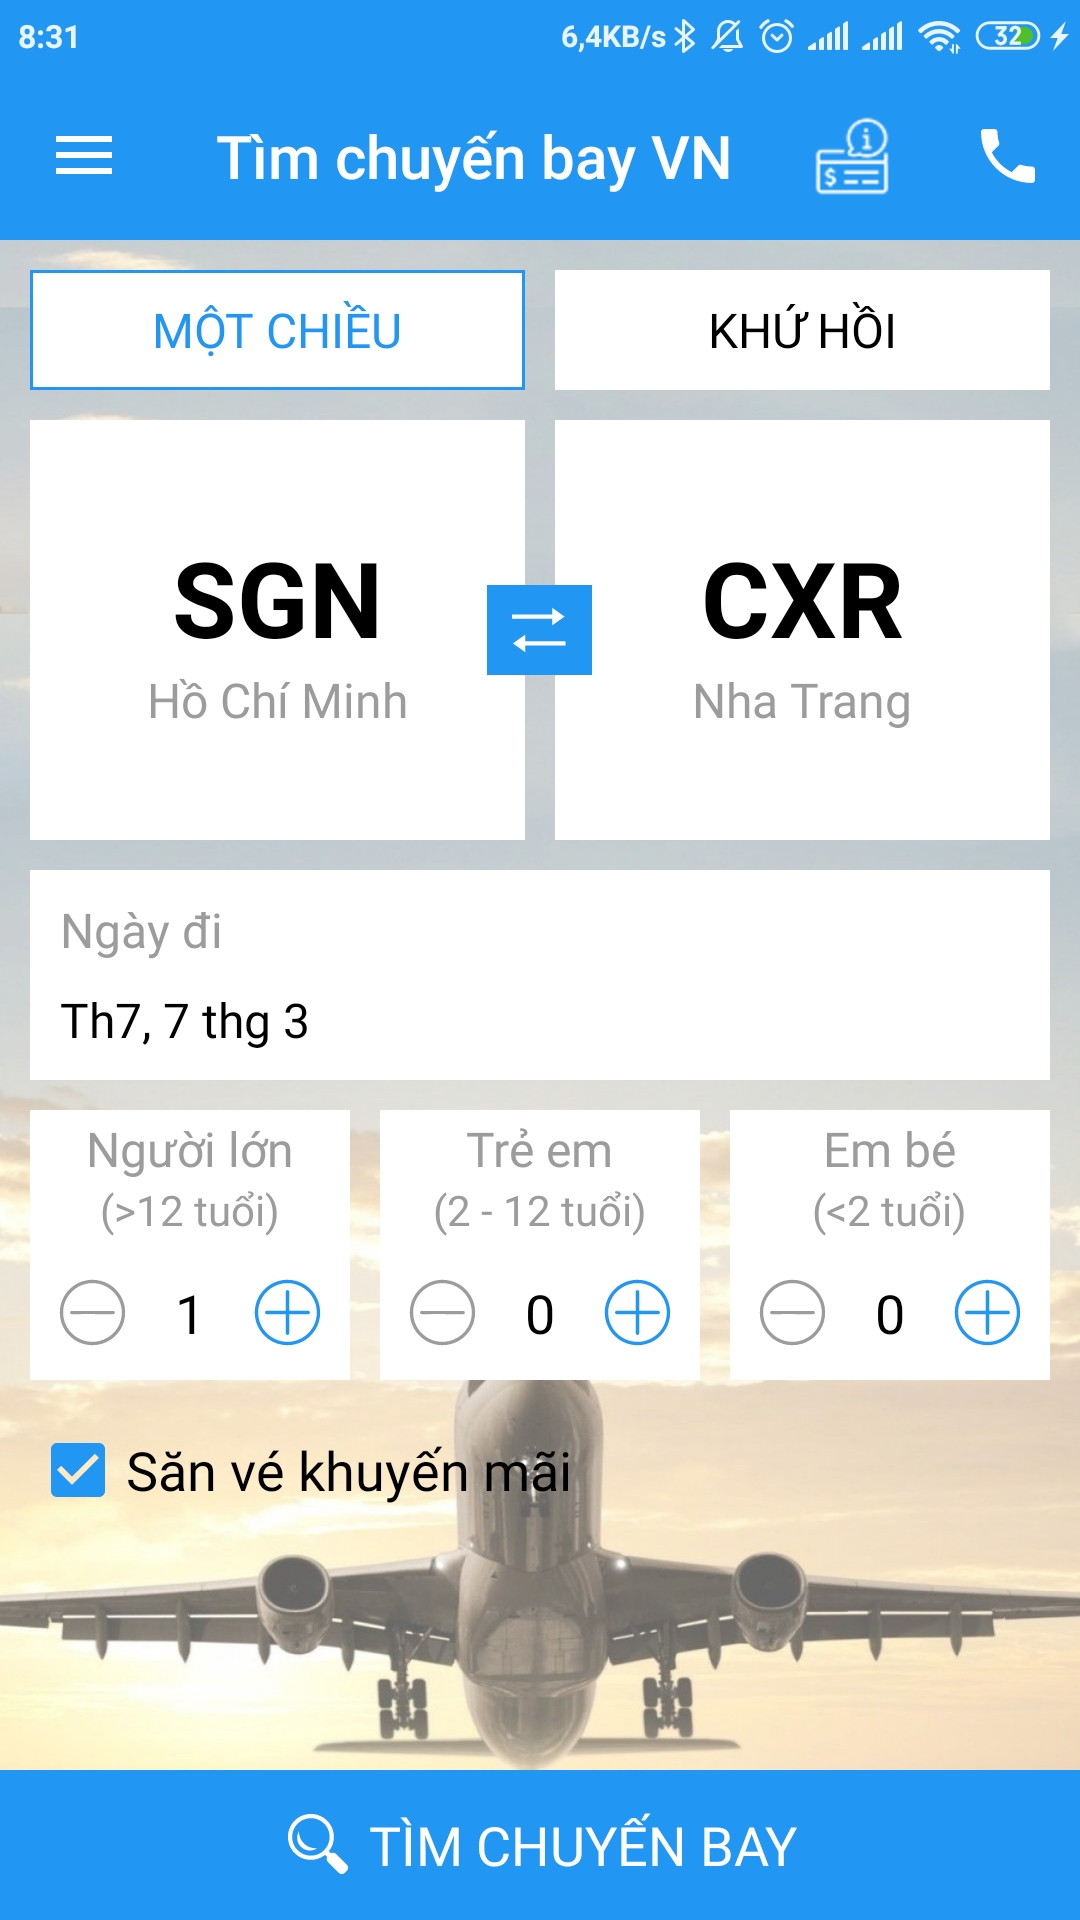 App tìm chuyến bay VN